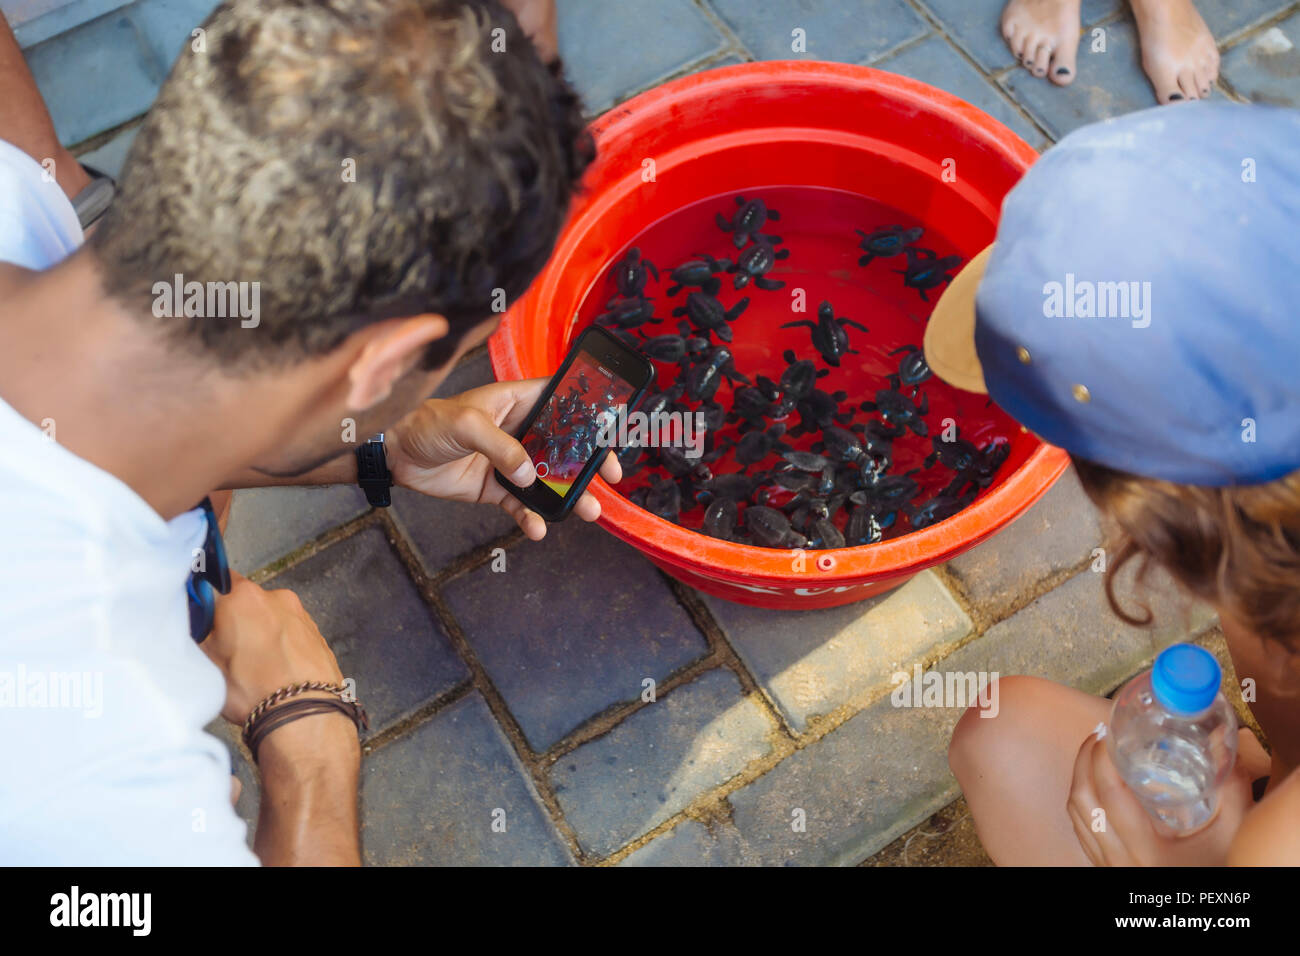 Tourist photographing baby turtles in bowl with smartphone, Kuta, Bali, Indonesia Stock Photo